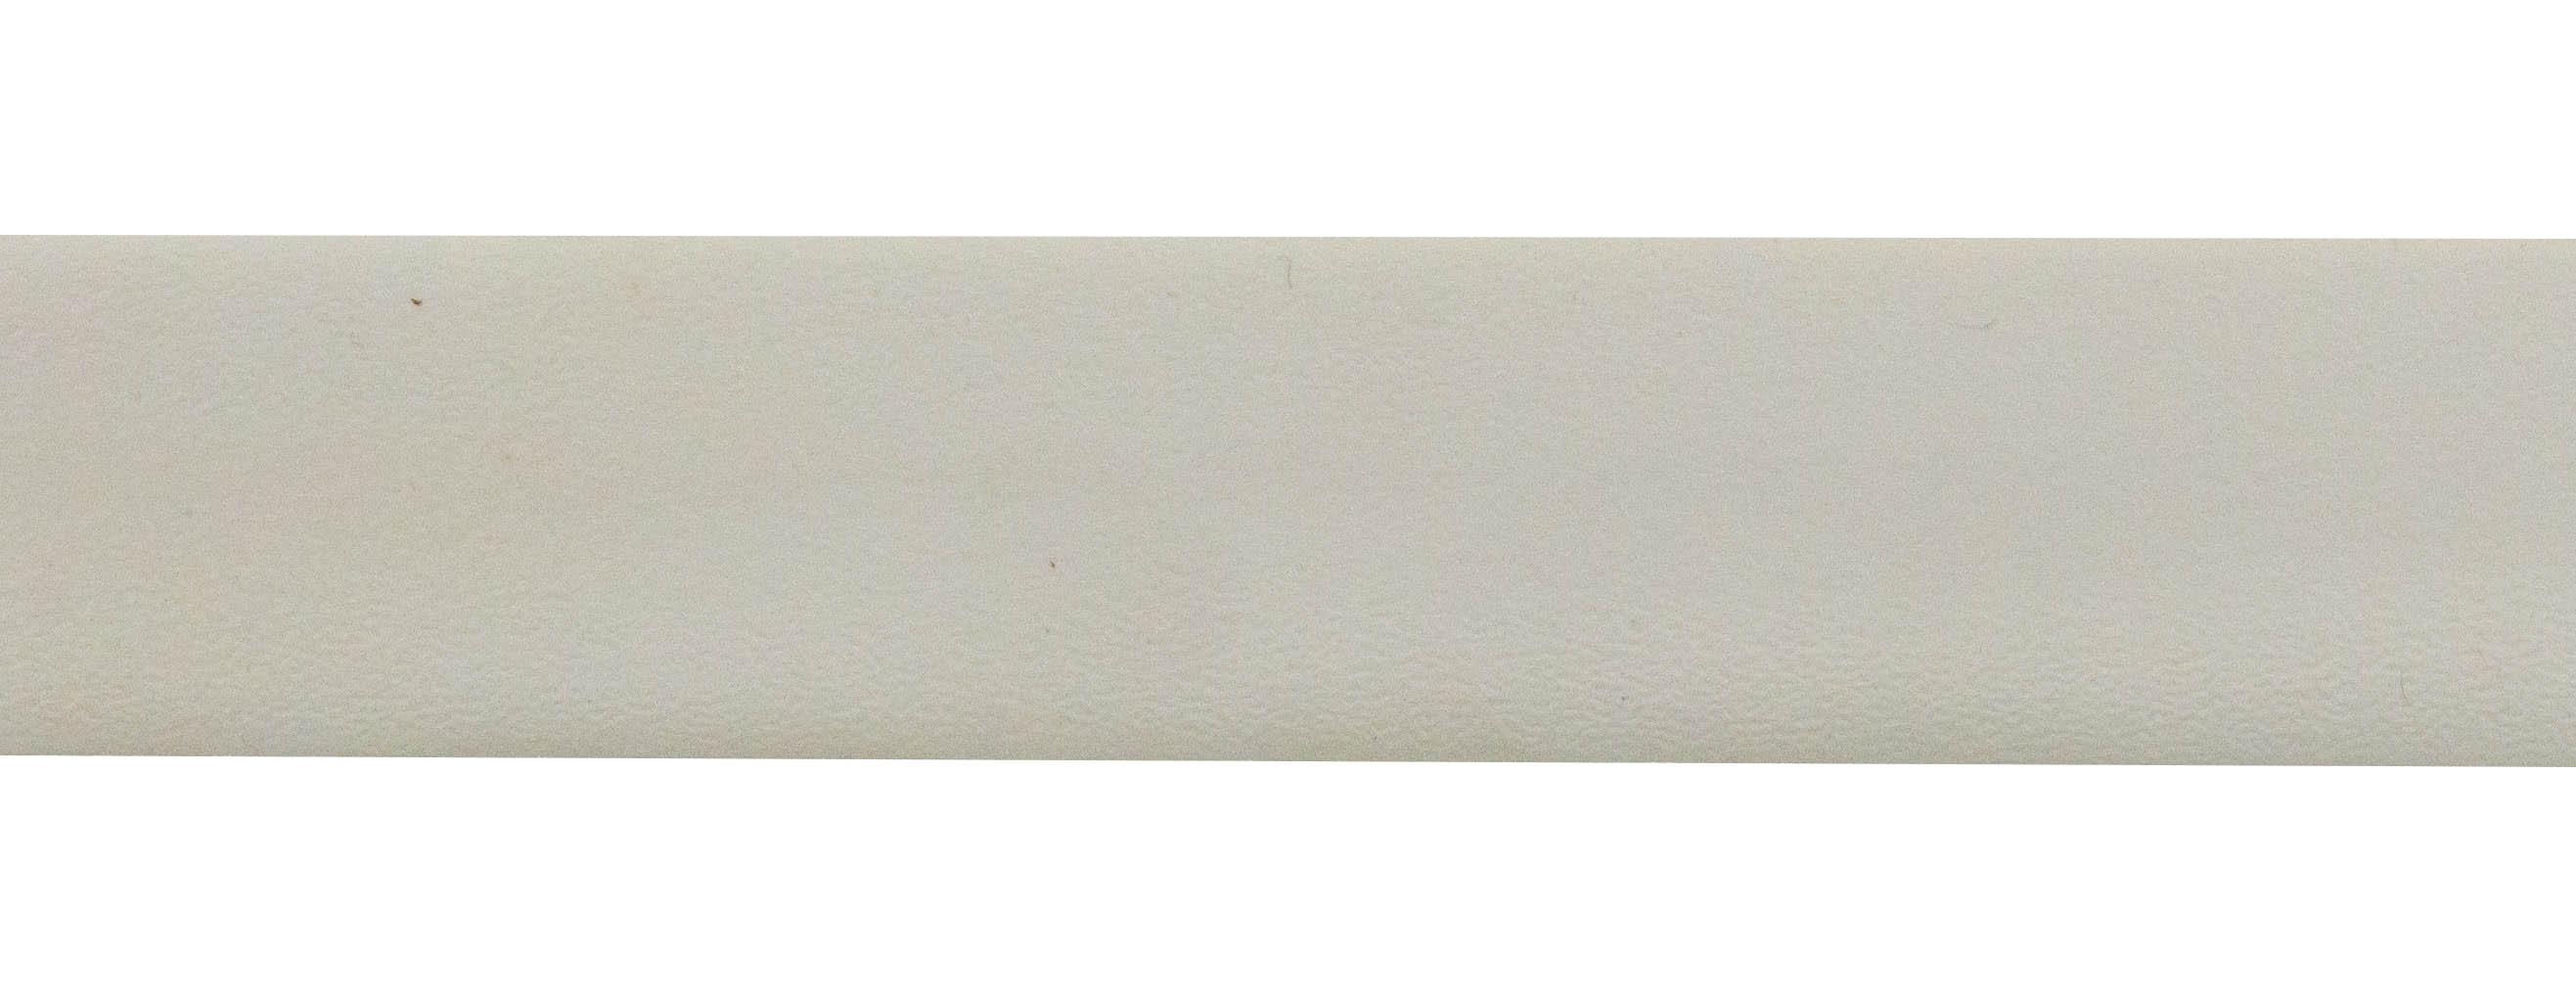 Пвх 0 5 мм. Фасады белая кожа. Бордюрная полоска KSB/2 ПВХ код. 6072909.